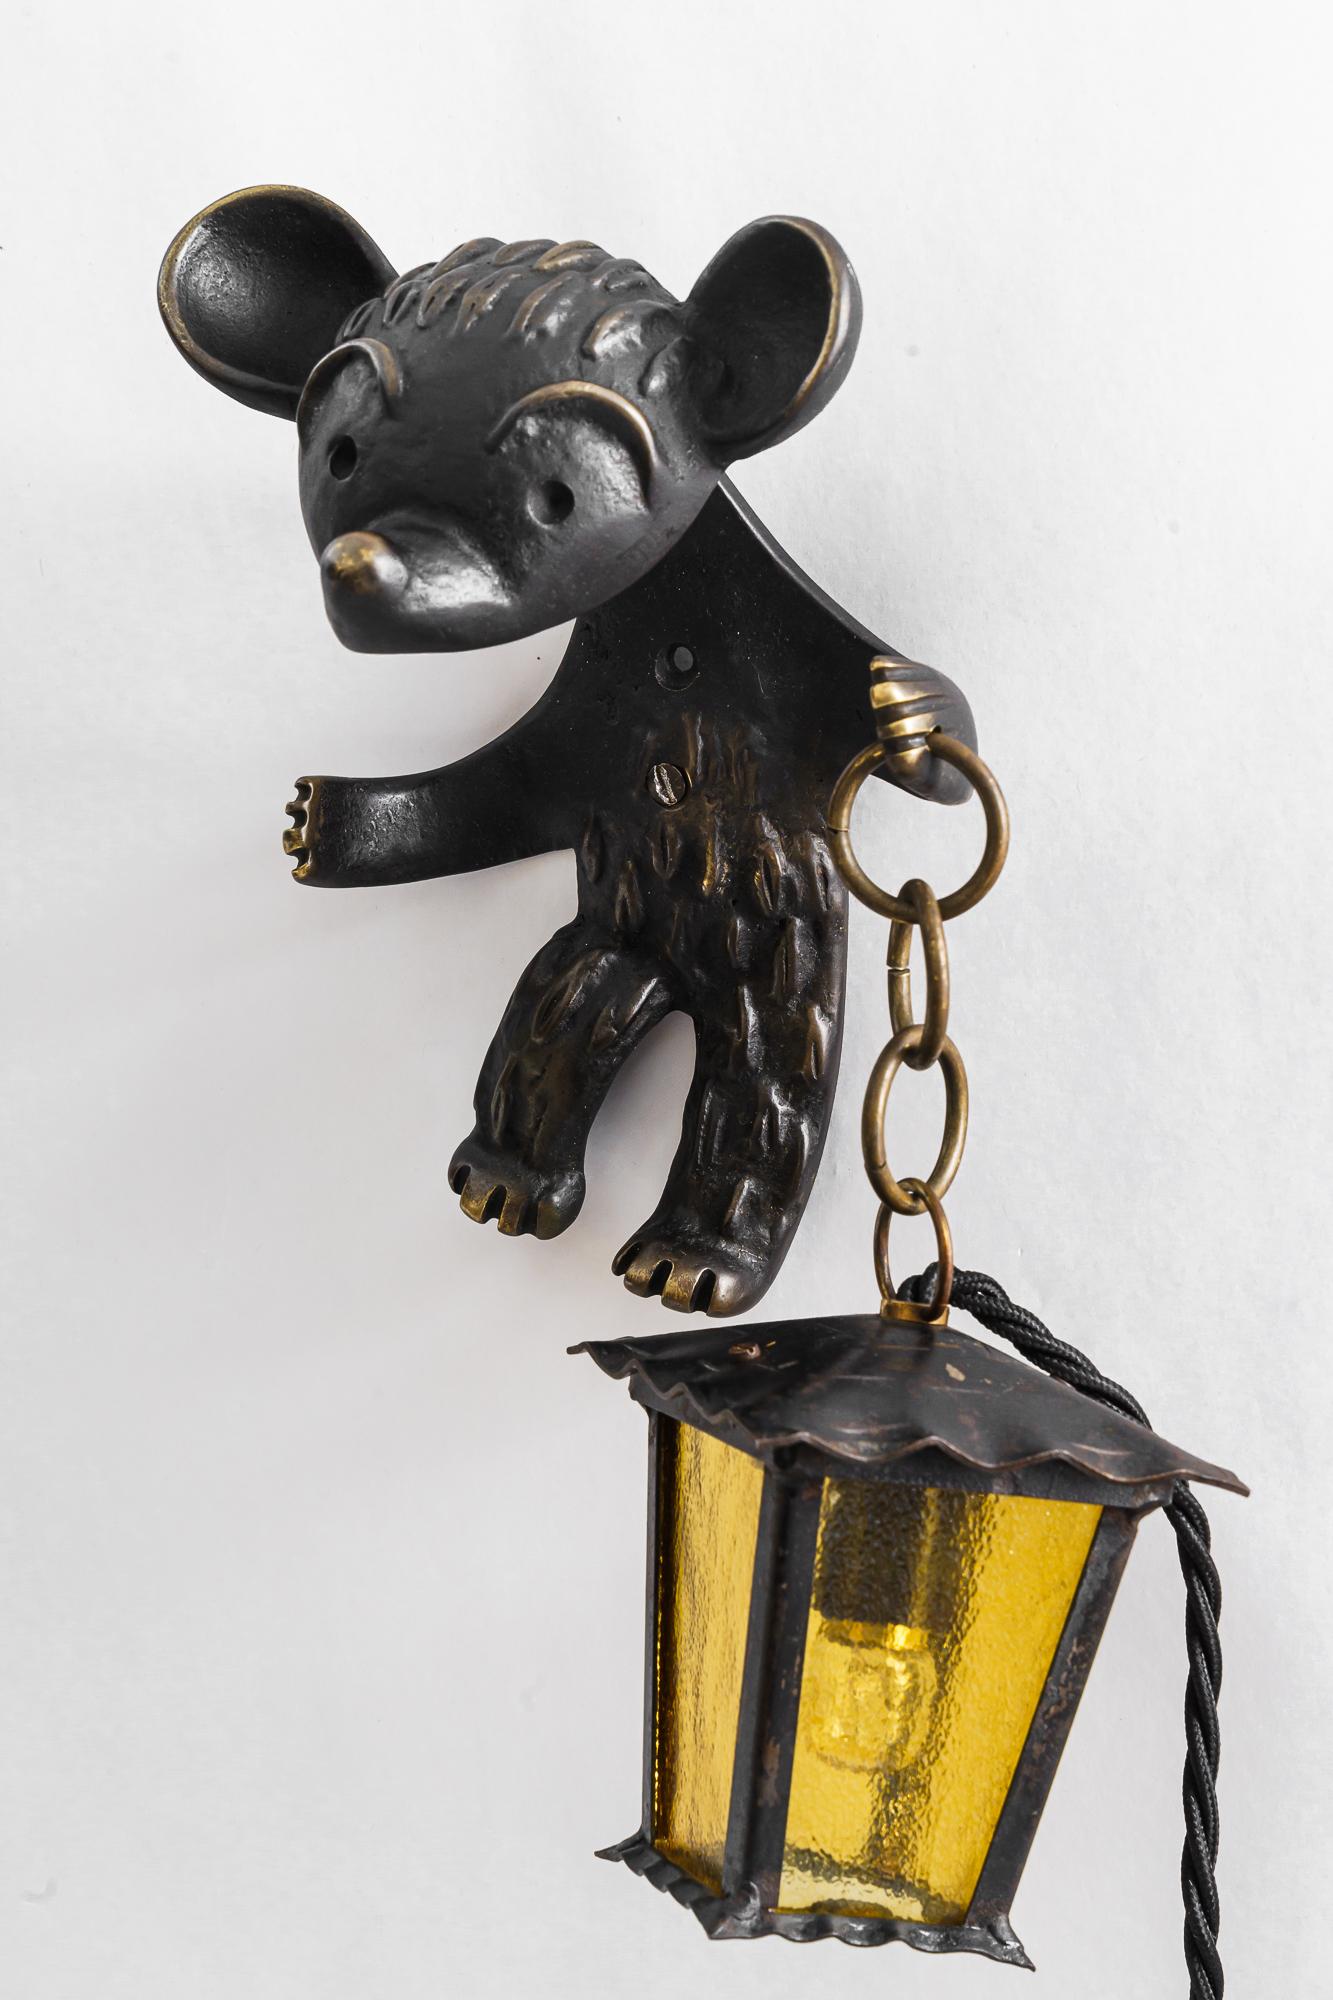 Rare walter bosse for hertha baller bear wall lamp holding a lantern vienna 1950s
Very good original condition